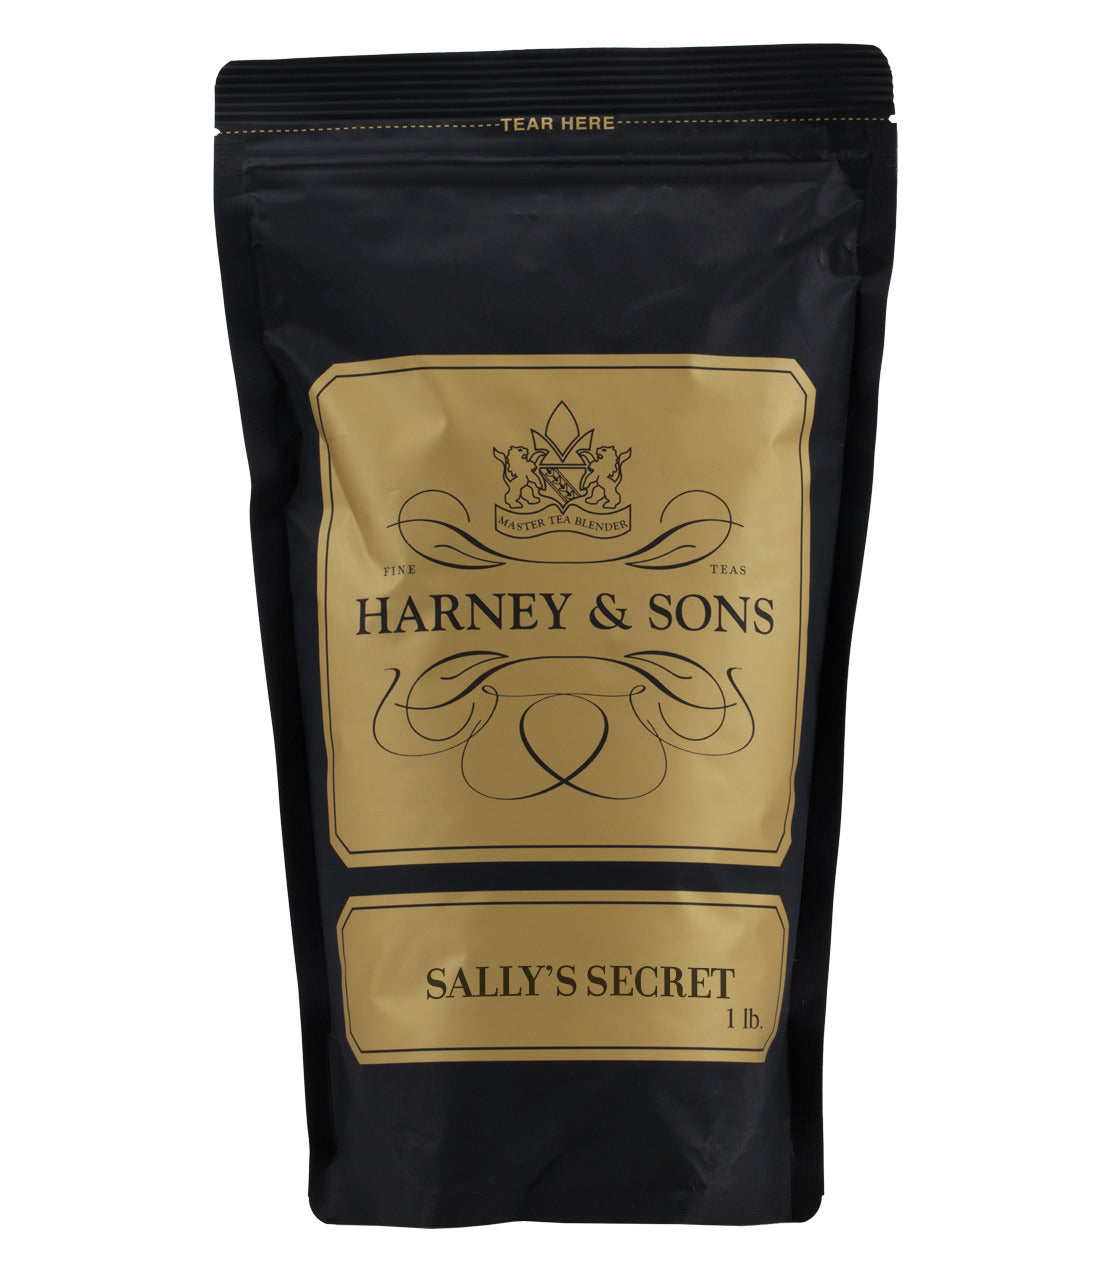 Sally's Secret - Loose 1 lb. Bag - Harney & Sons Fine Teas